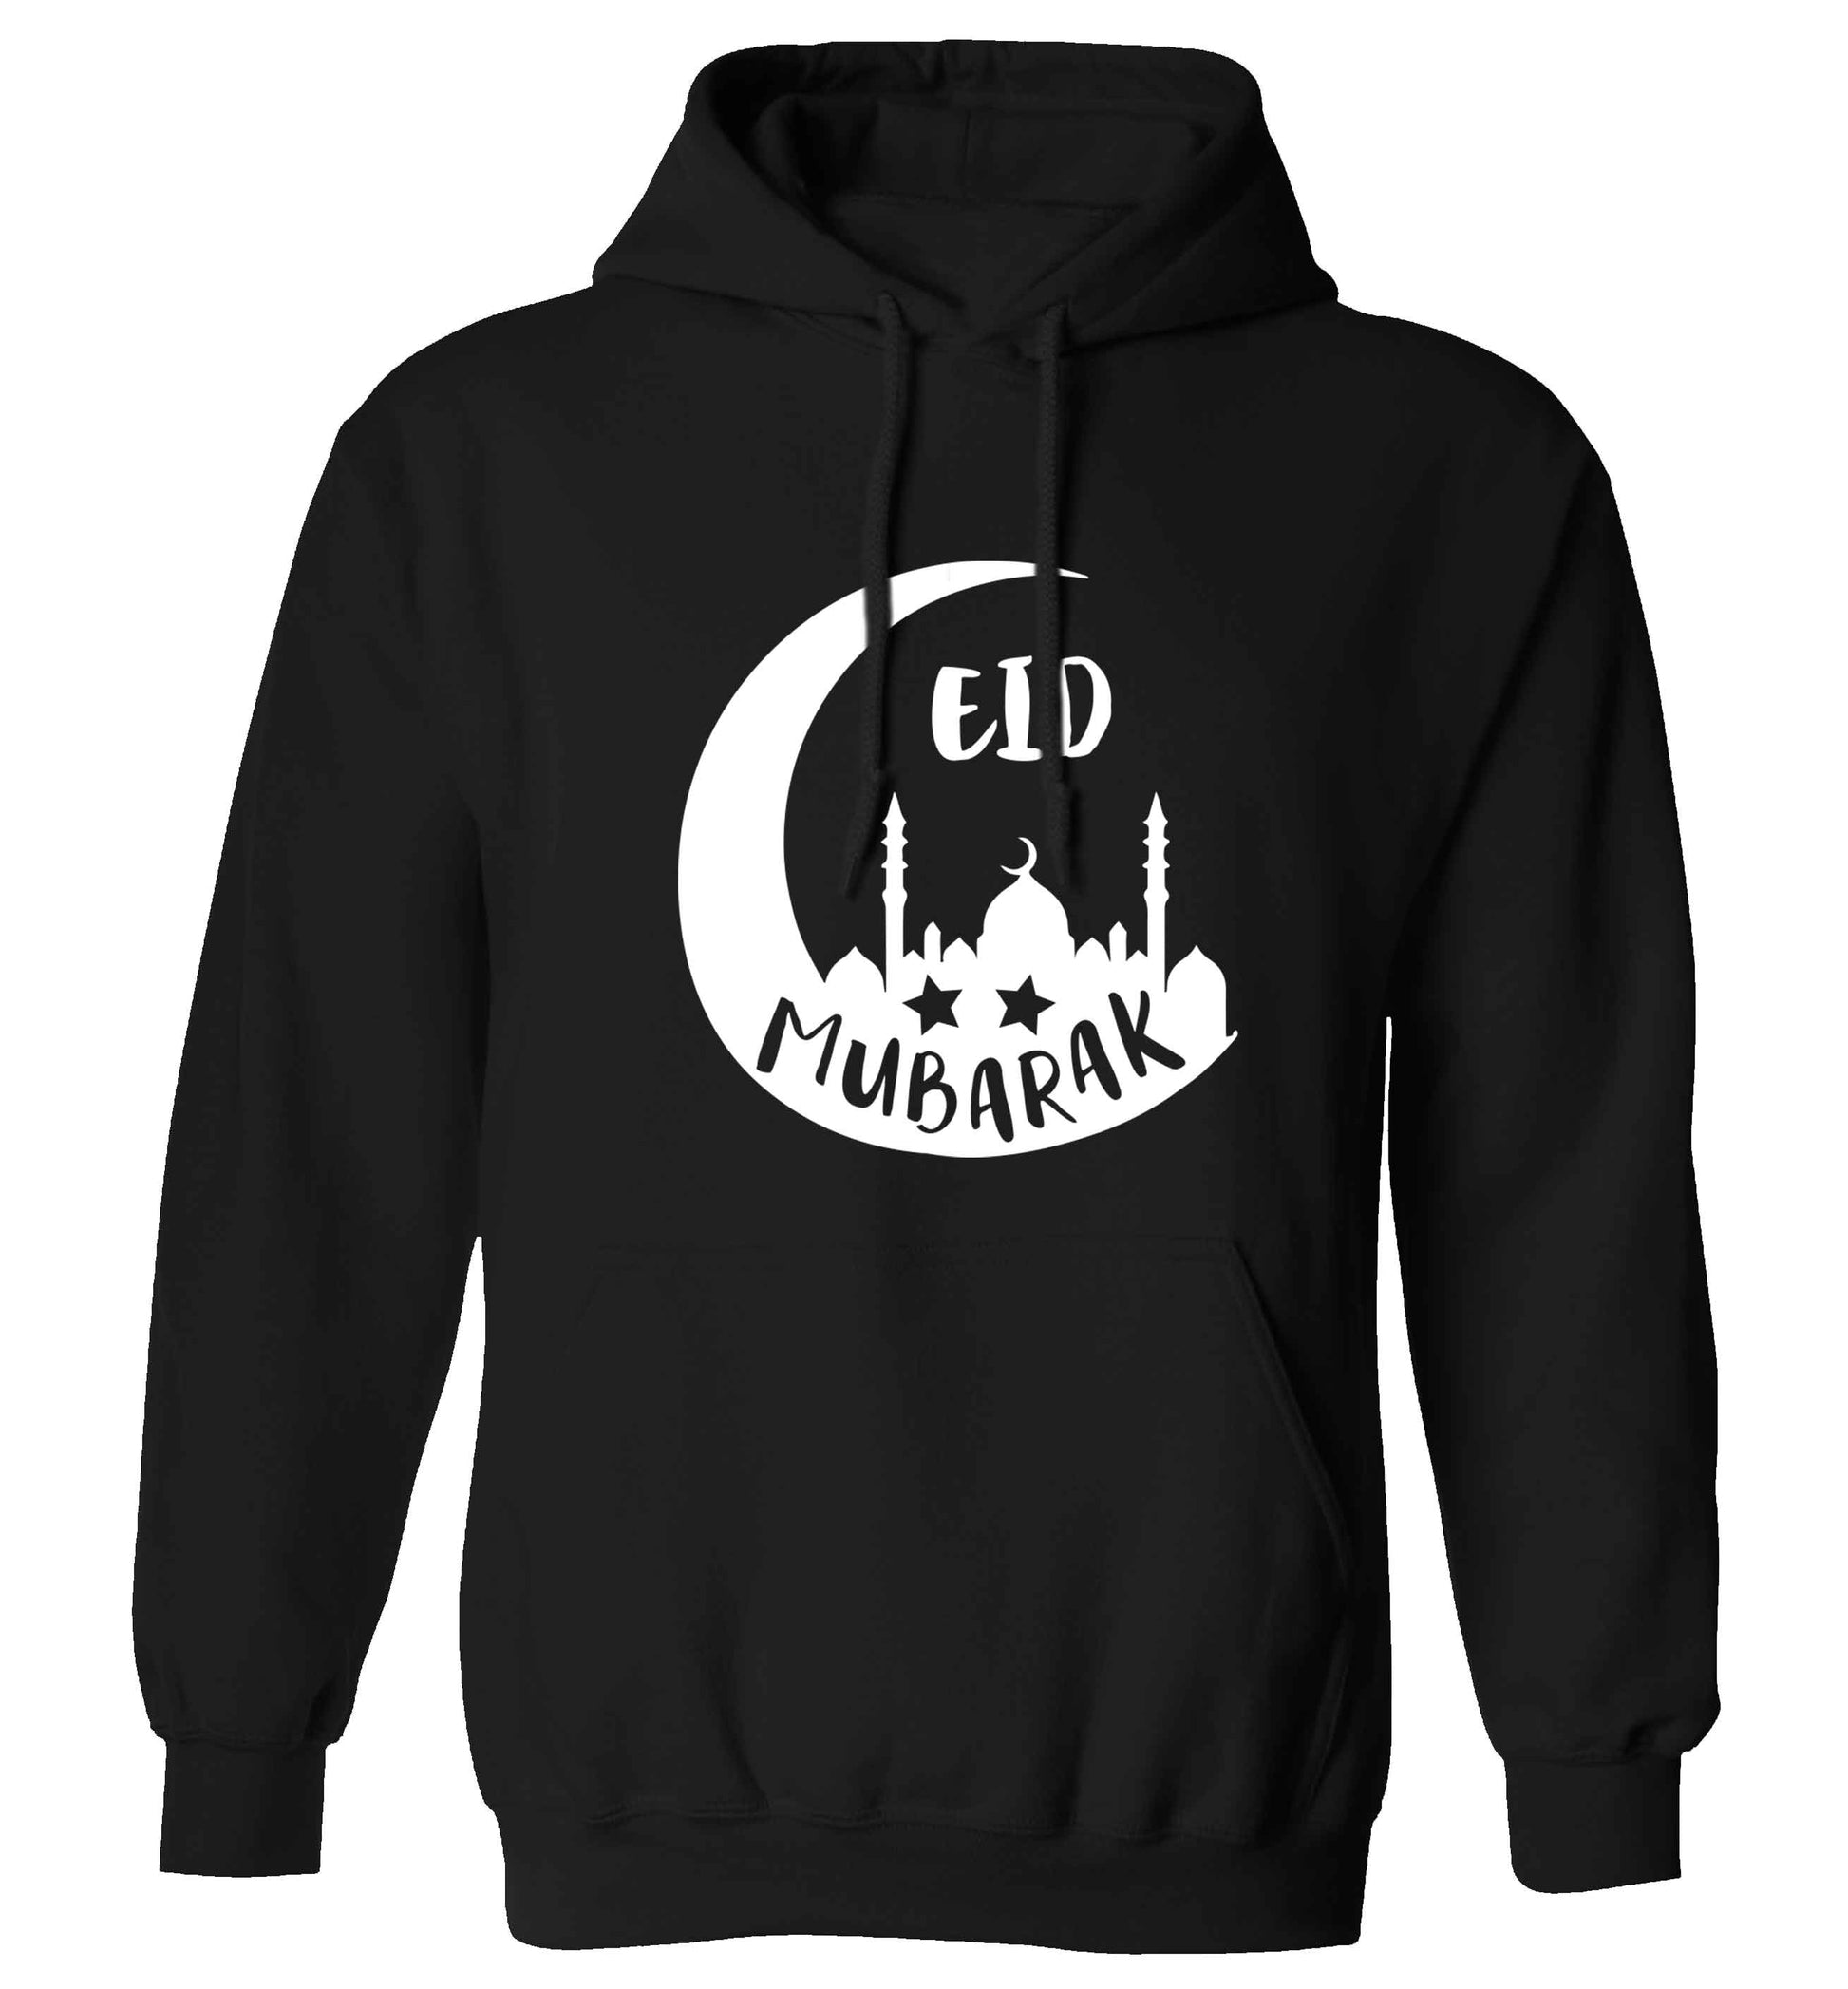 Eid mubarak adults unisex black hoodie 2XL